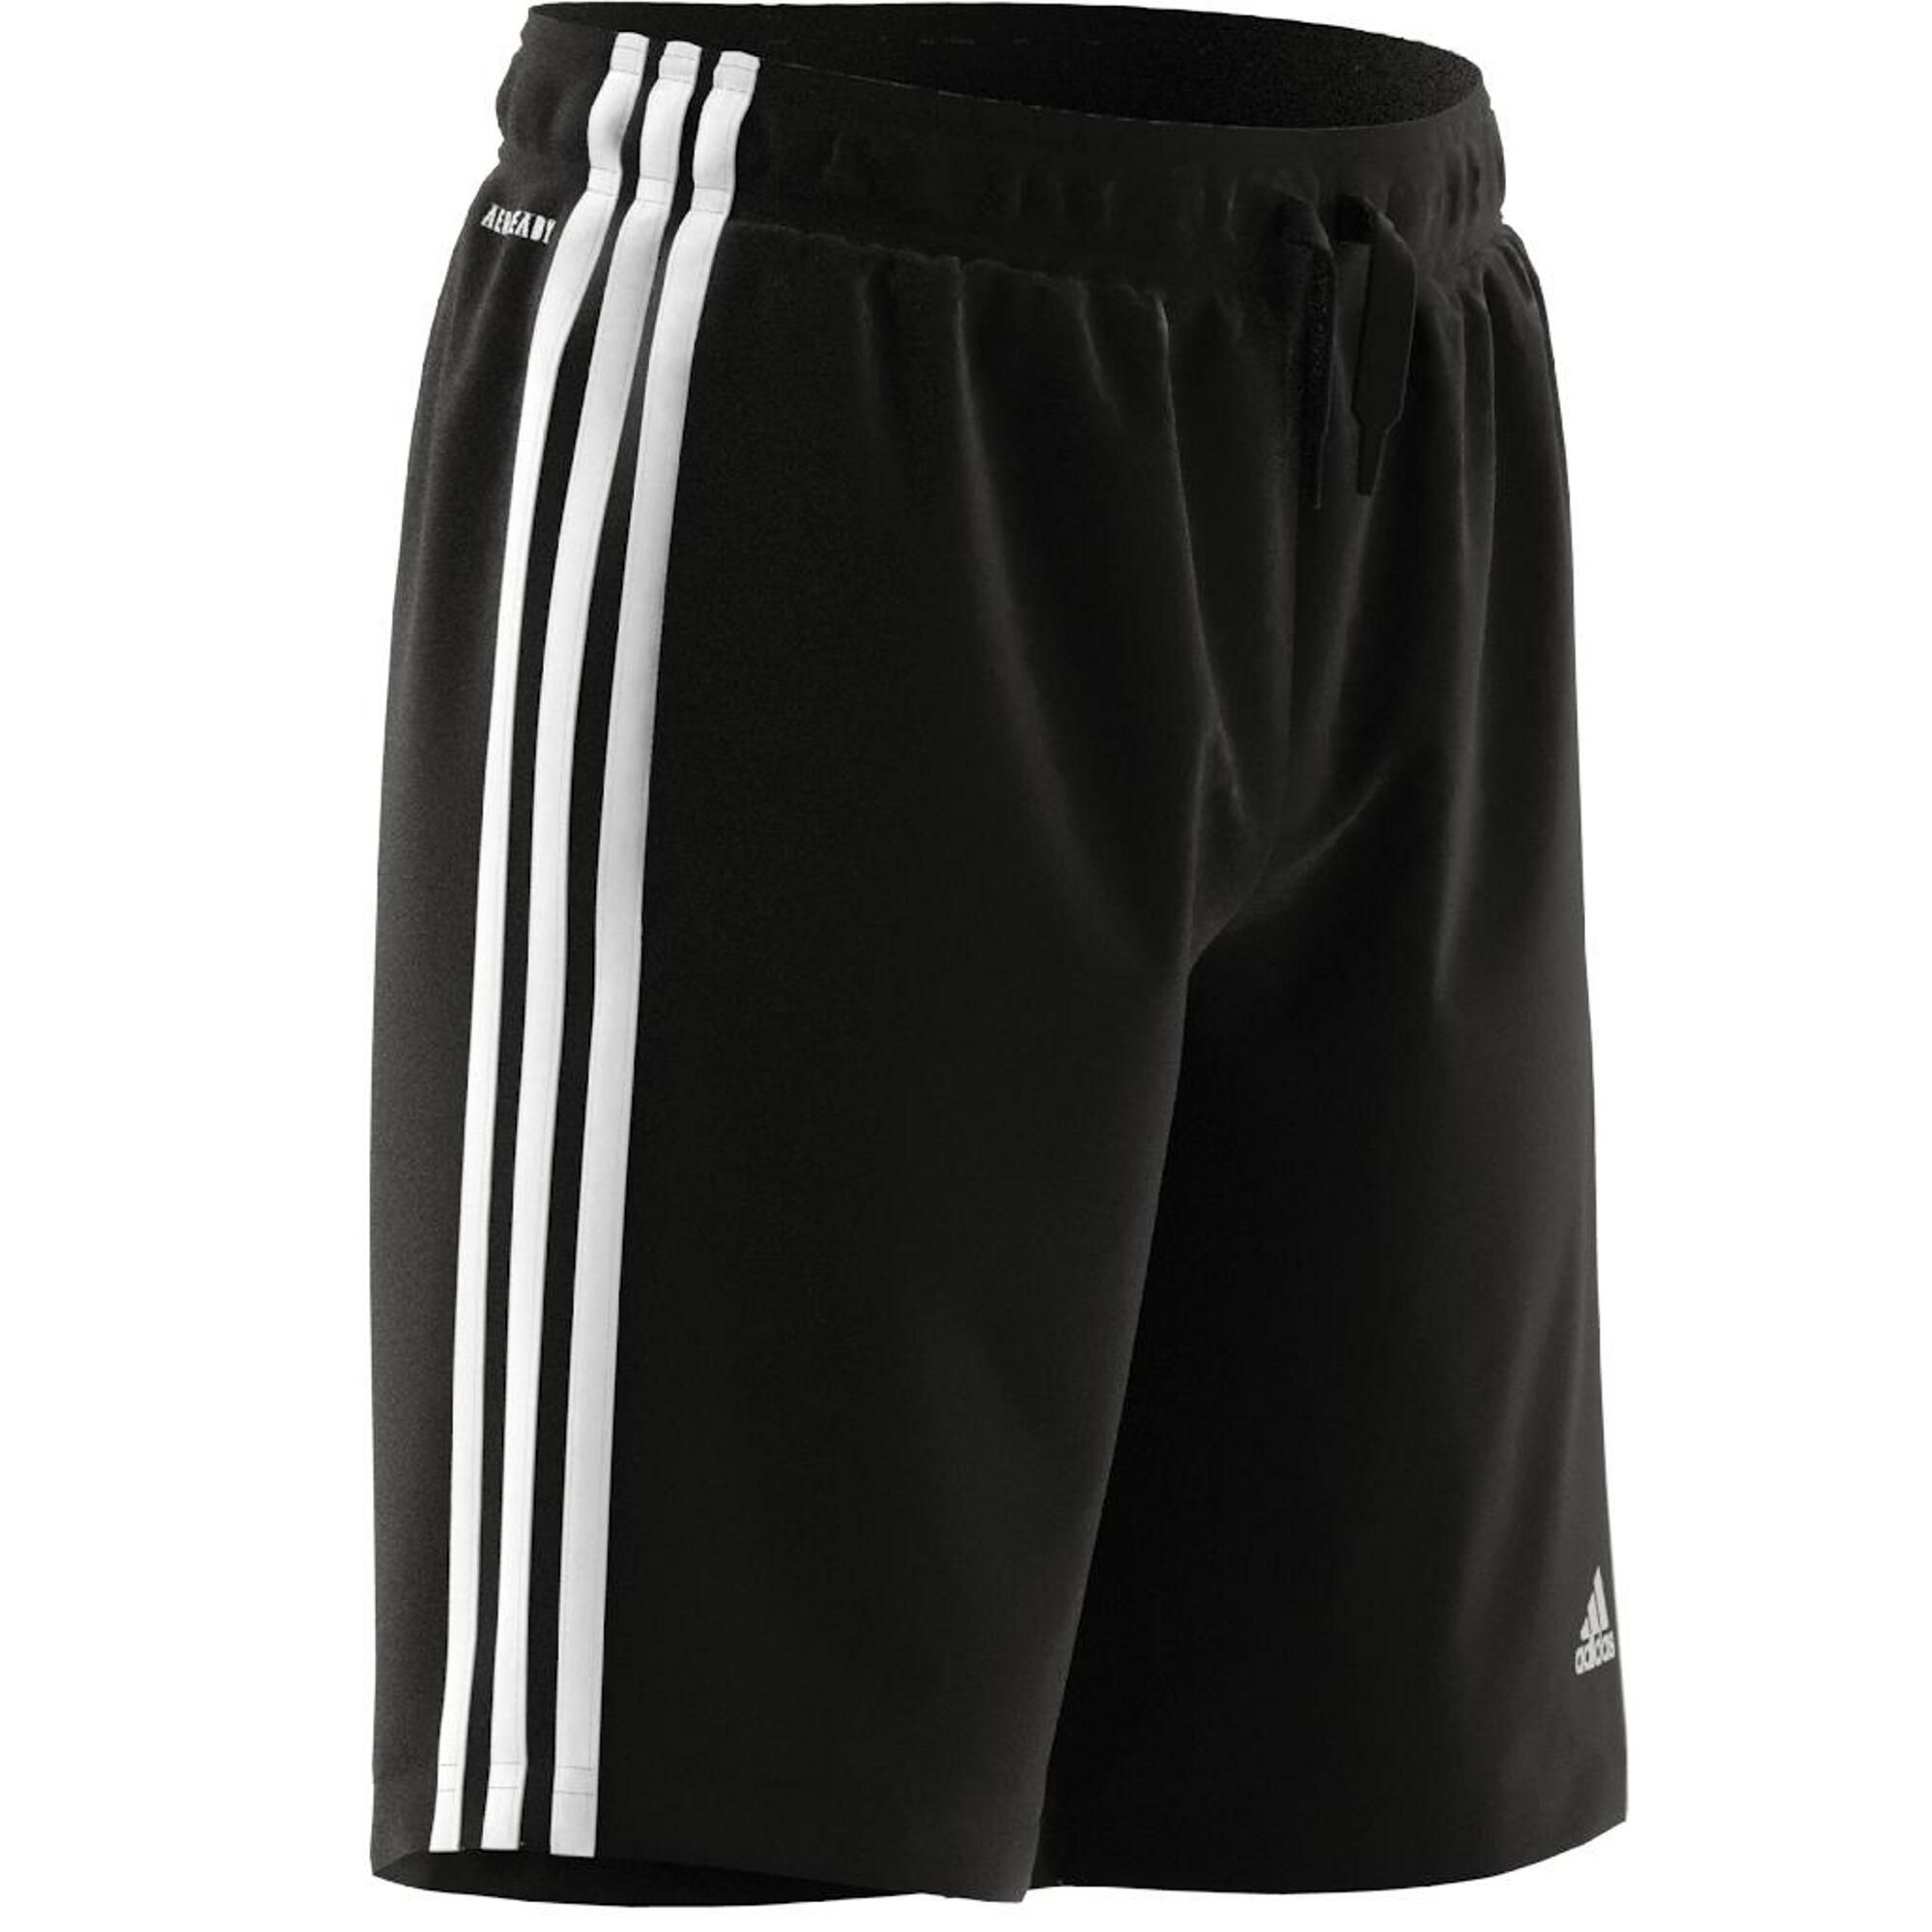 ADIDAS Boys' Shorts 3 Stripes - Black